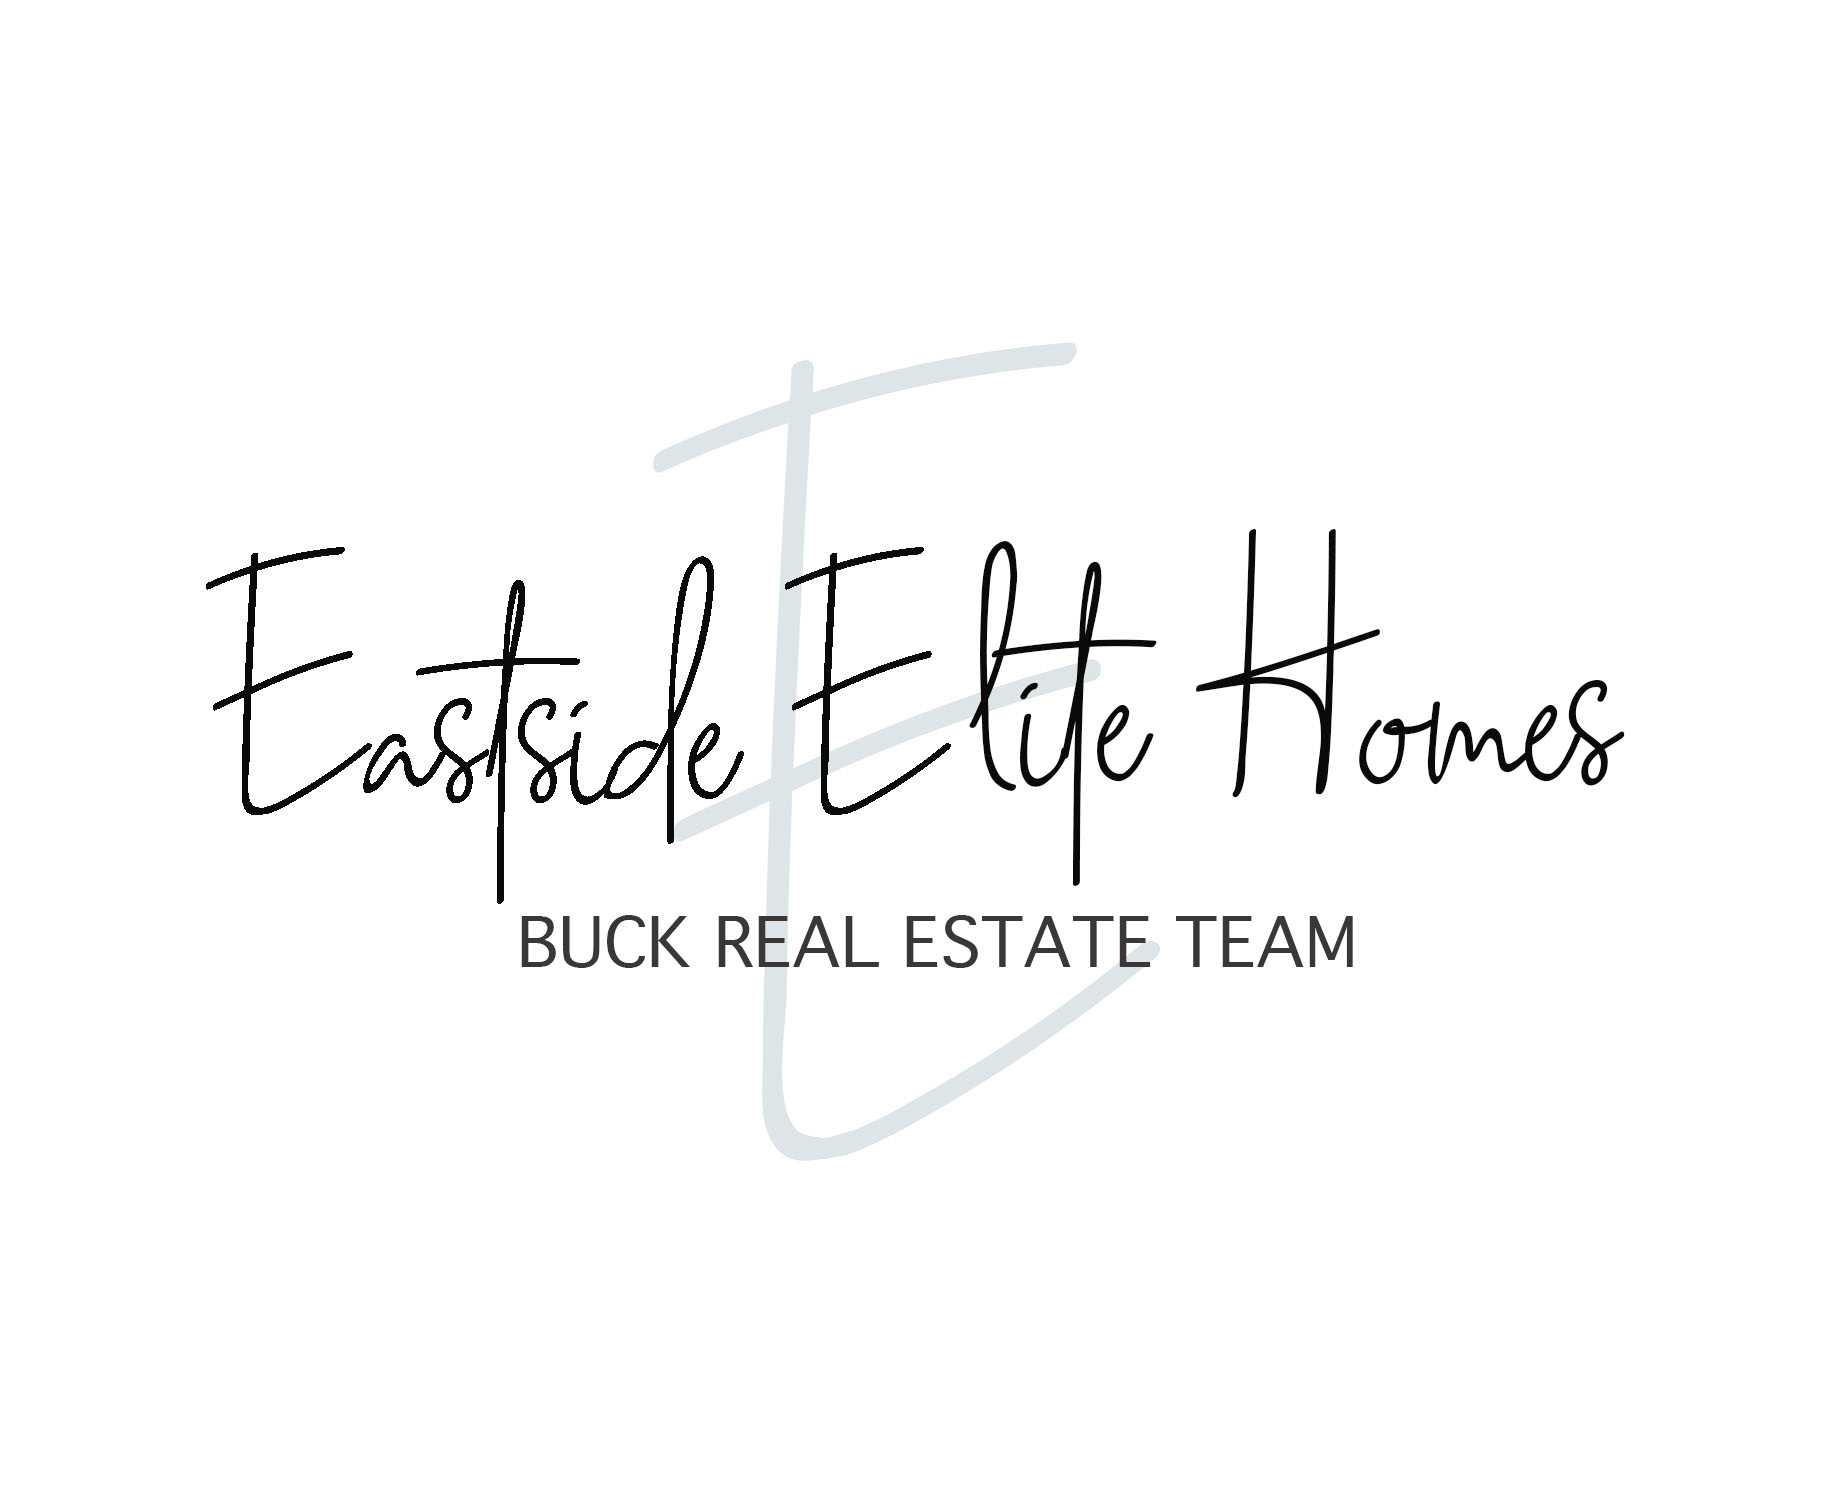 Eastside Elite Homes/Buck Real Estate